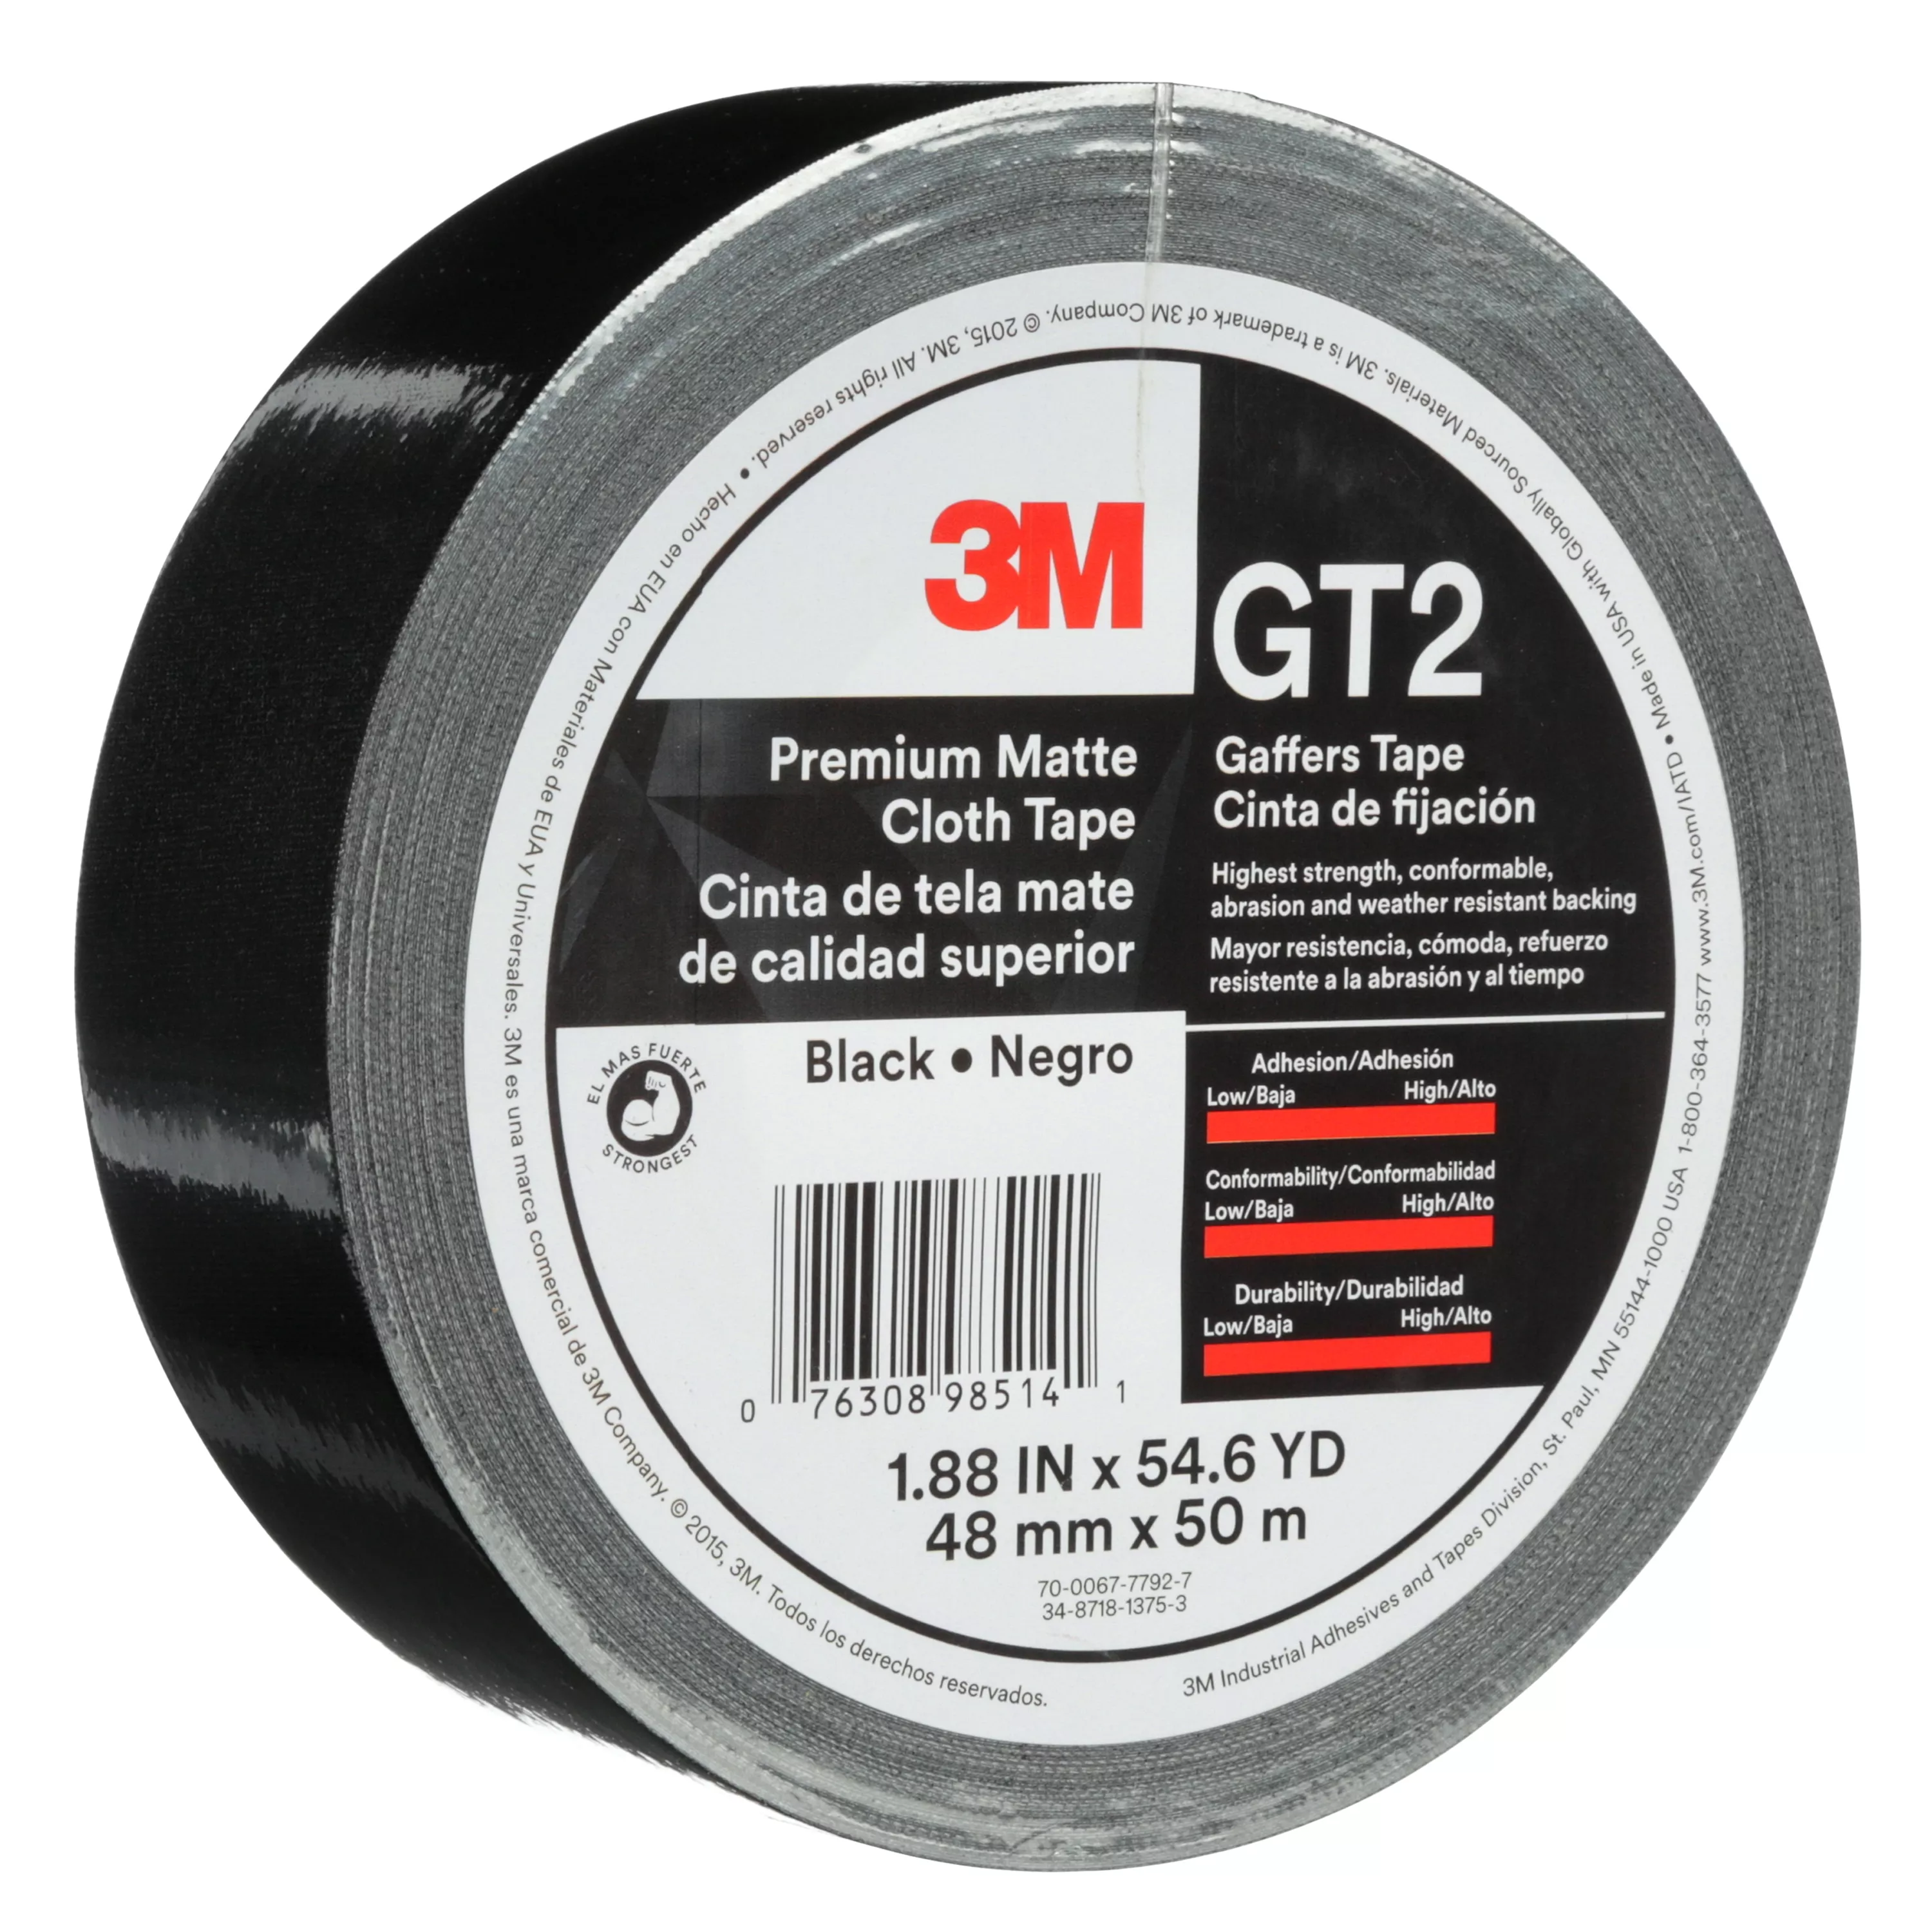 3M™ Premium Matte Cloth (Gaffers) Tape GT2, Black, 48 mm x 50 m, 11 mil,
24/Case